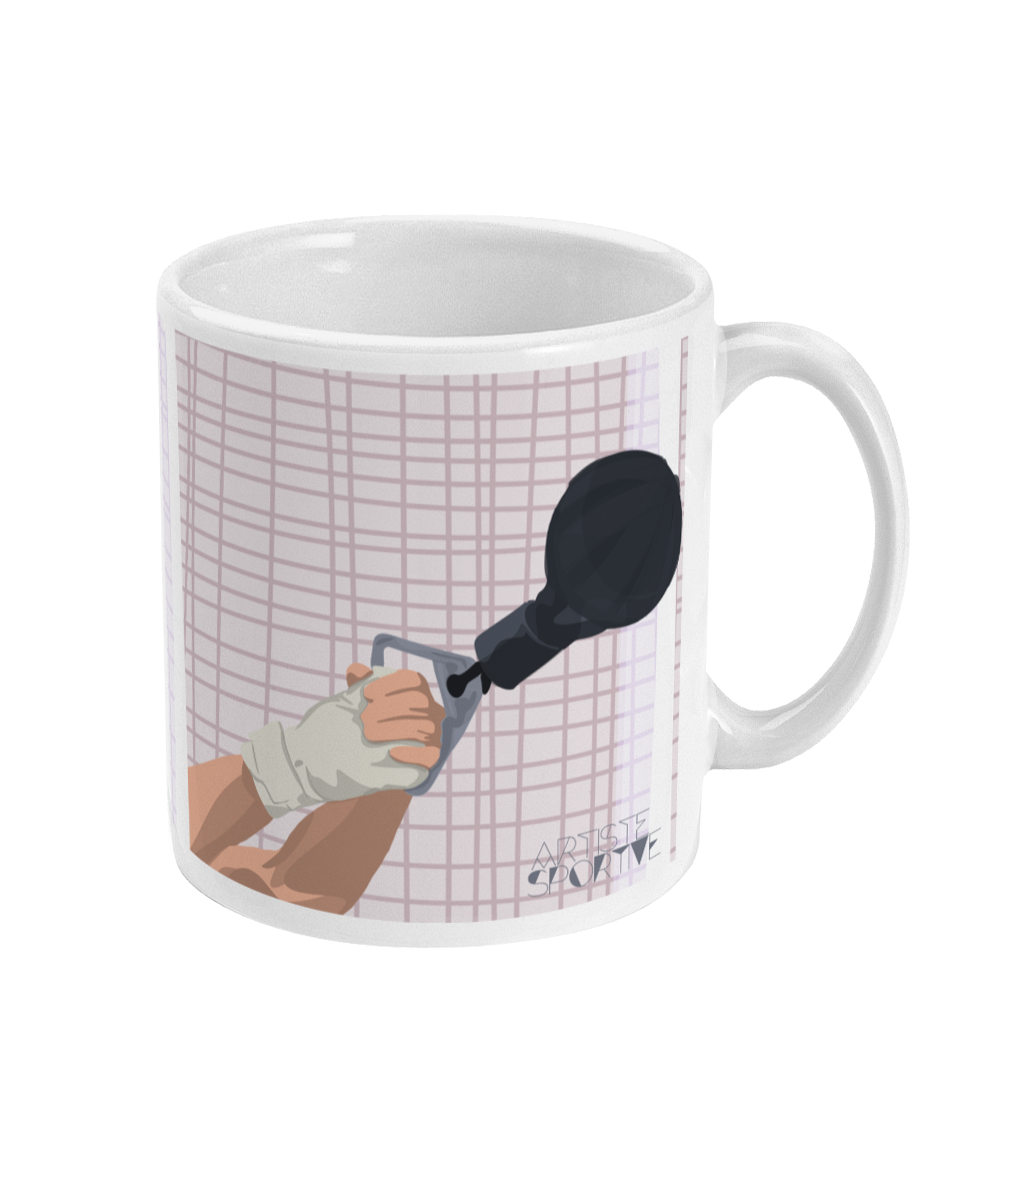 “Hammer Throw” athletics mug to personalize